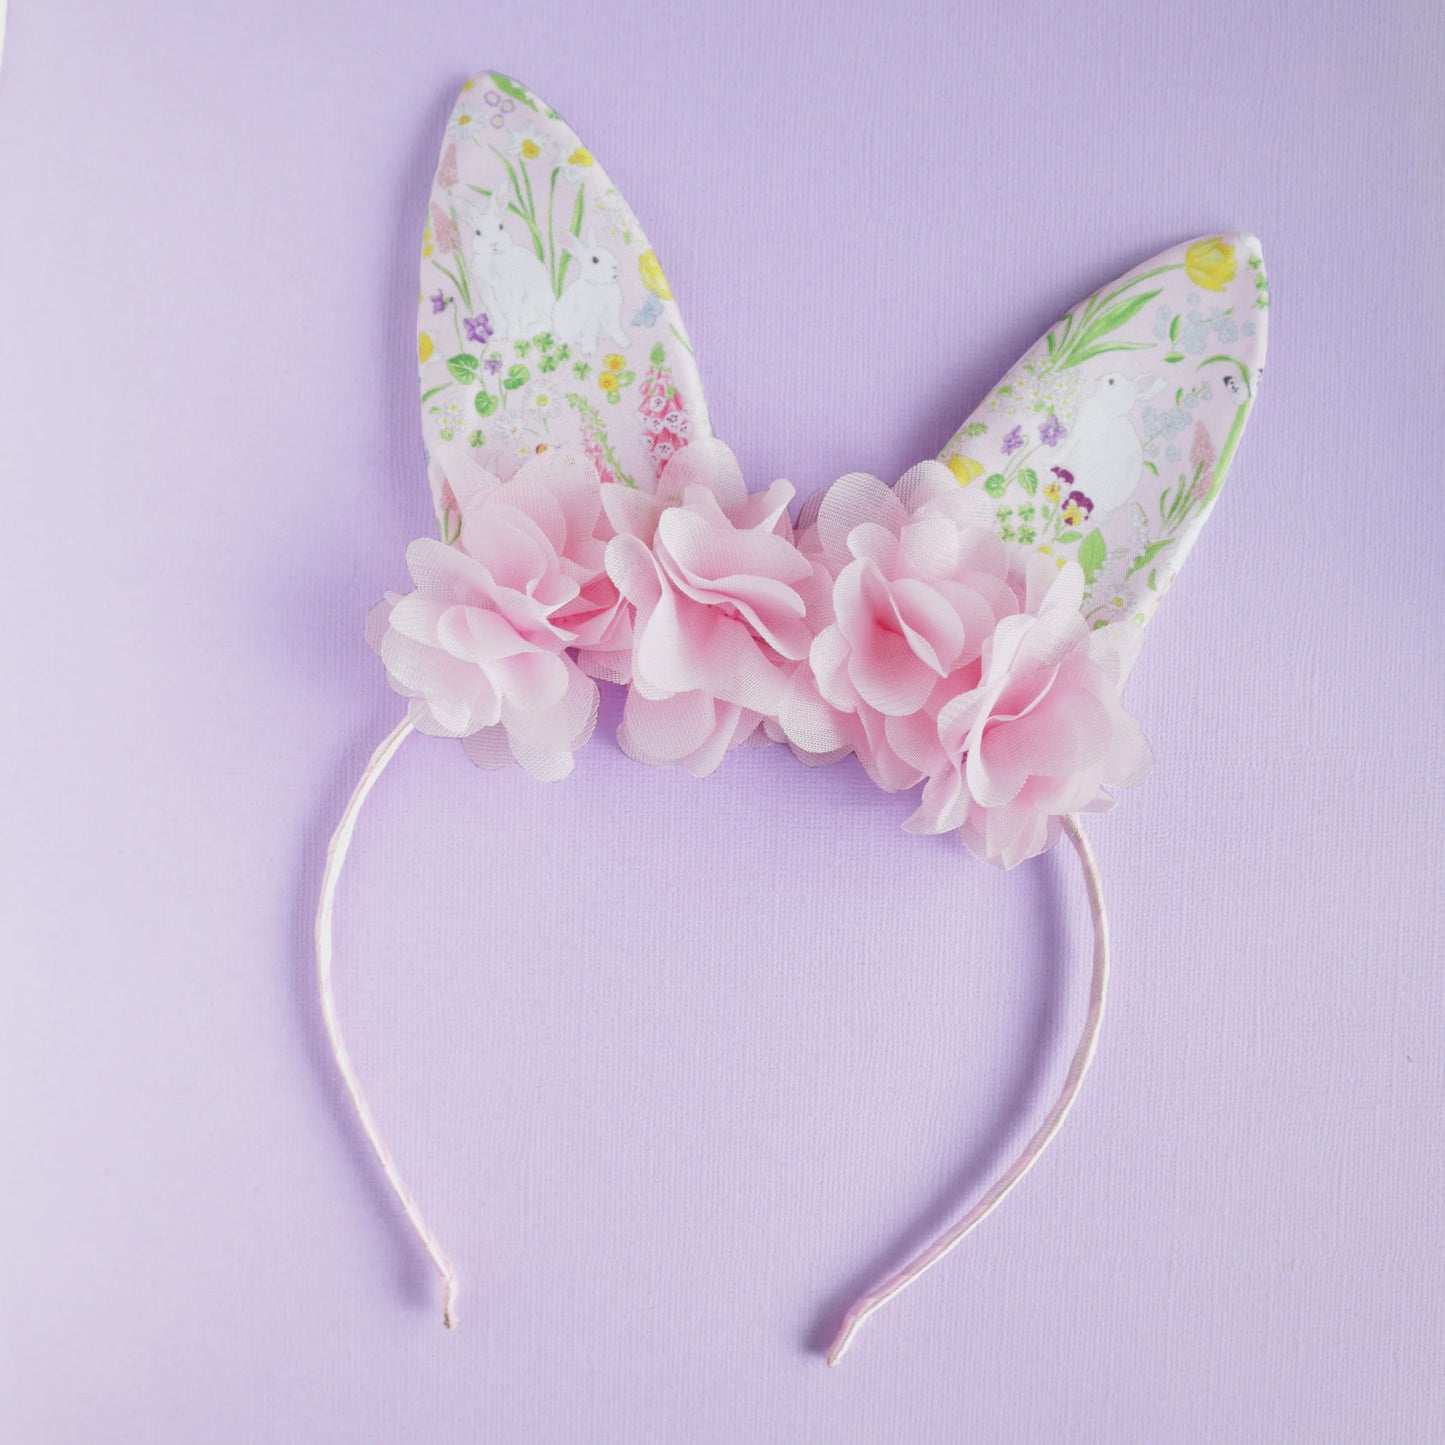 Floral Dreams Bunny Ears Headband